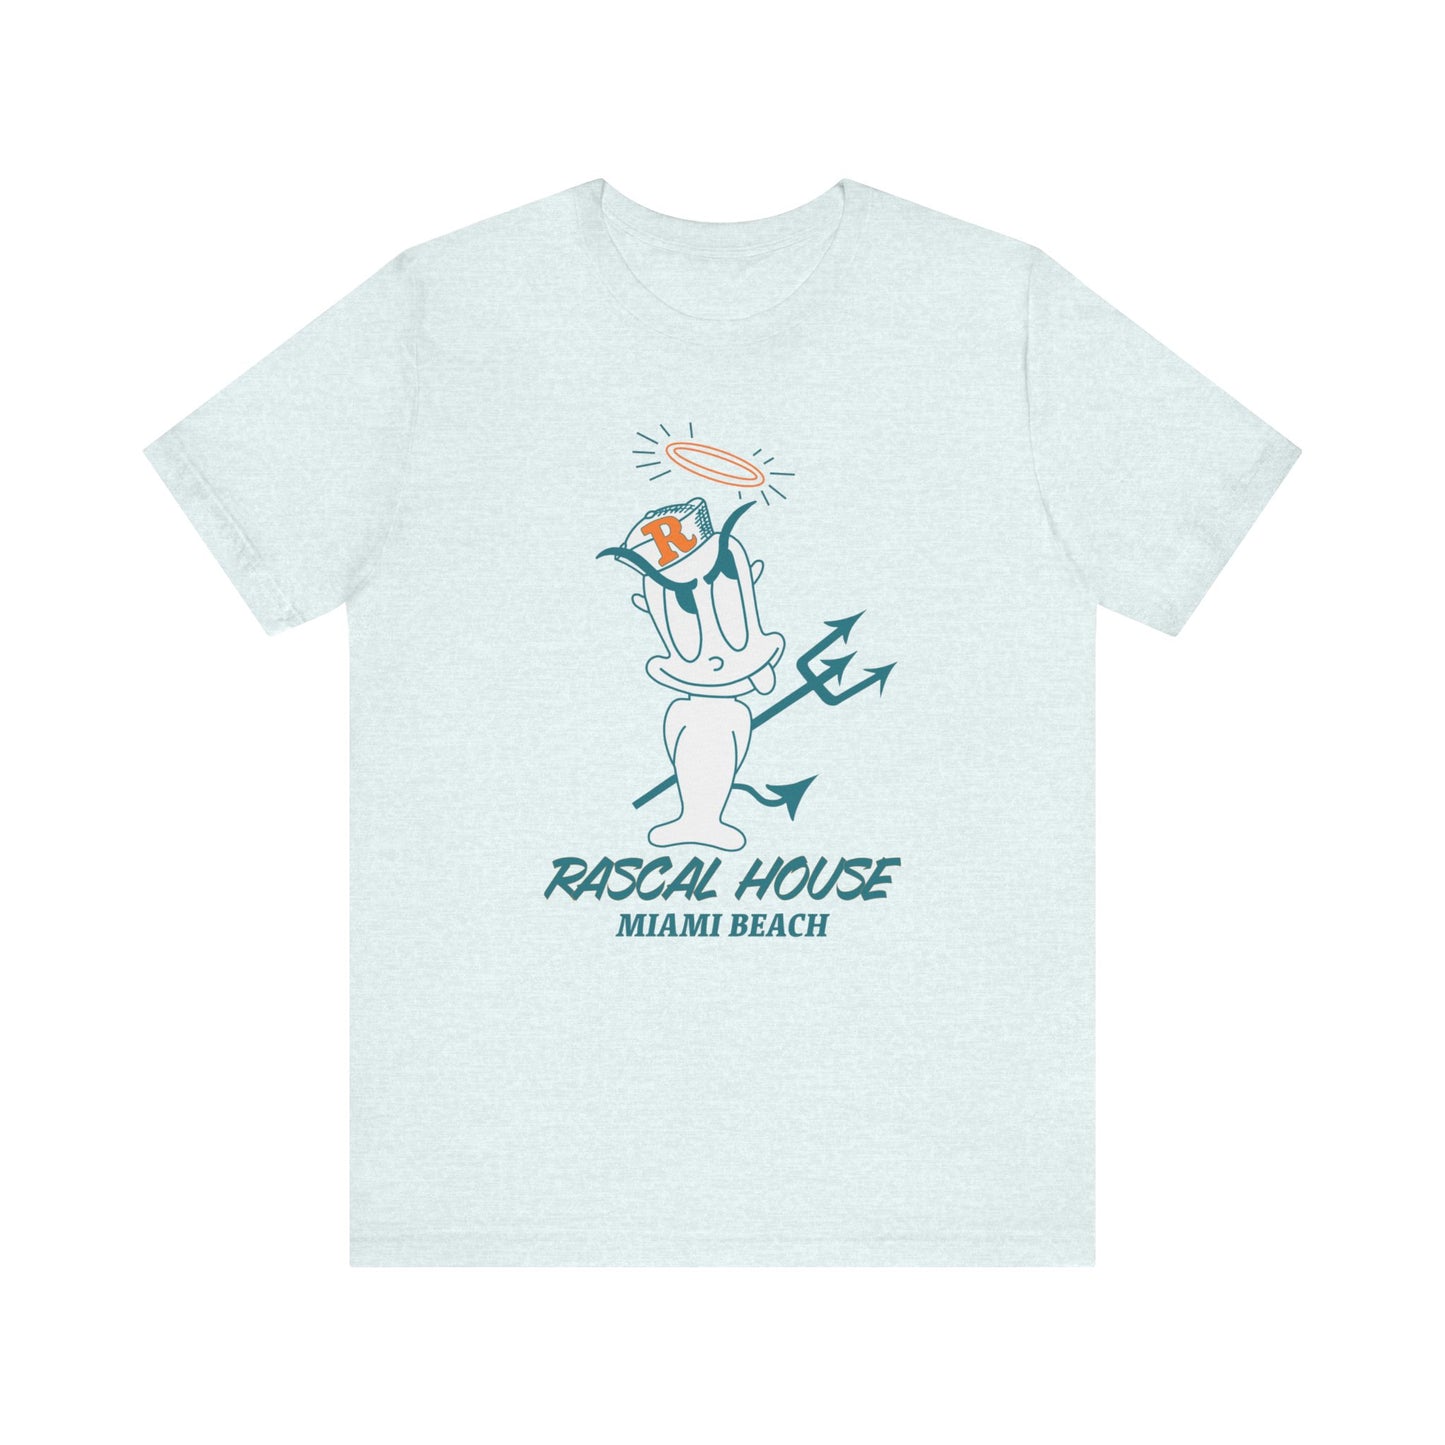 Rascal House - Unisex T-Shirt